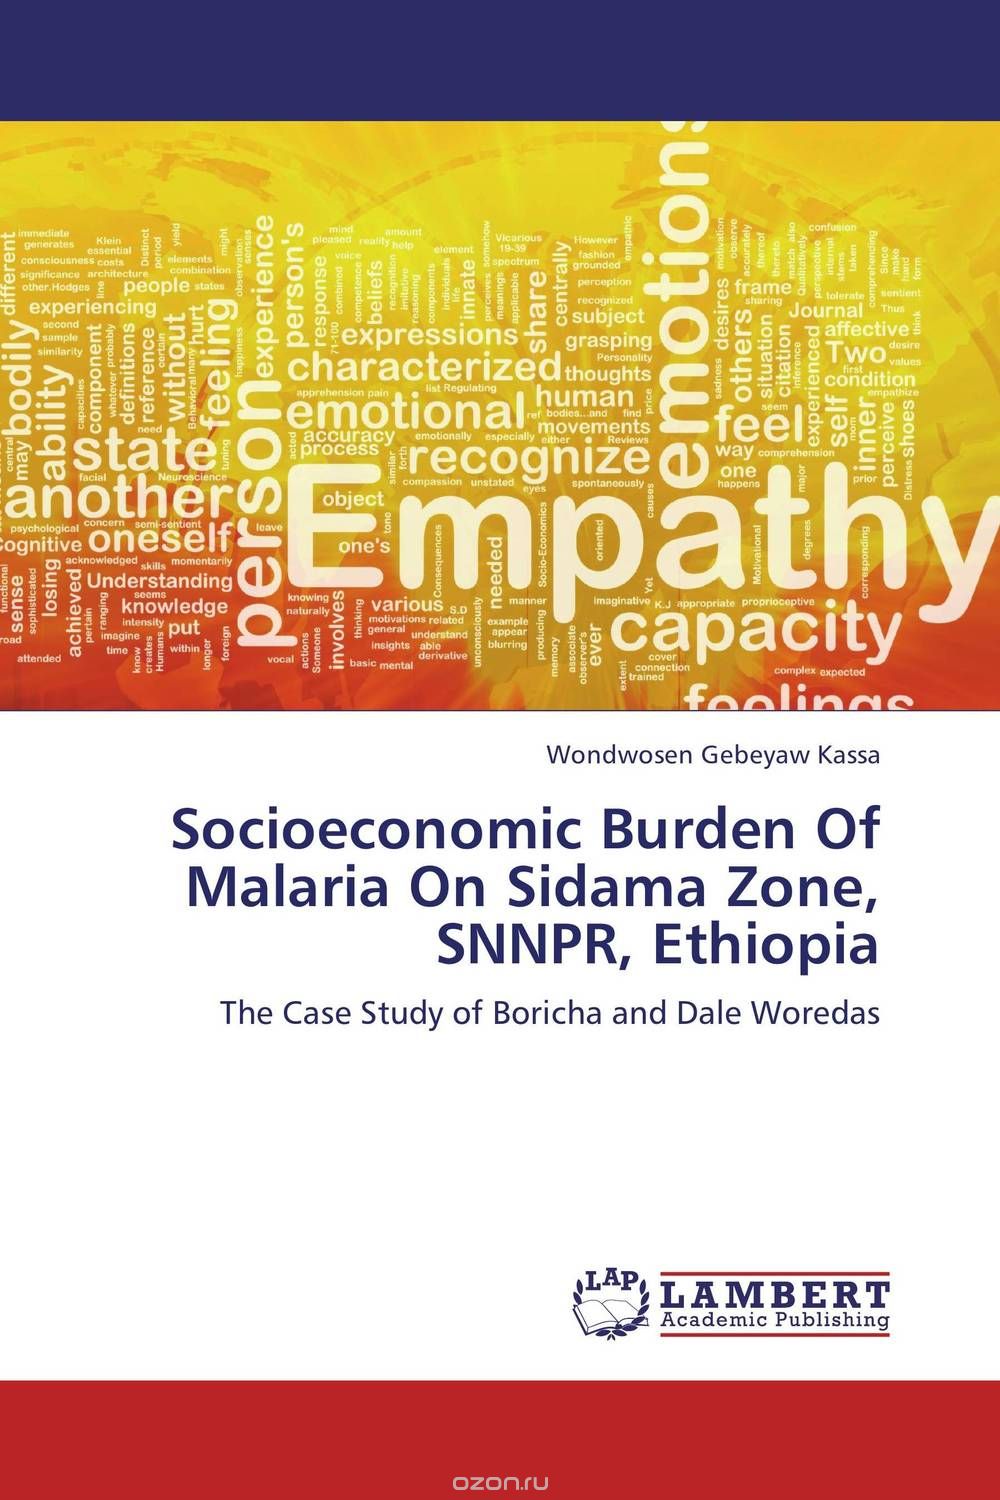 Скачать книгу "Socioeconomic Burden Of Malaria On Sidama Zone, SNNPR, Ethiopia"